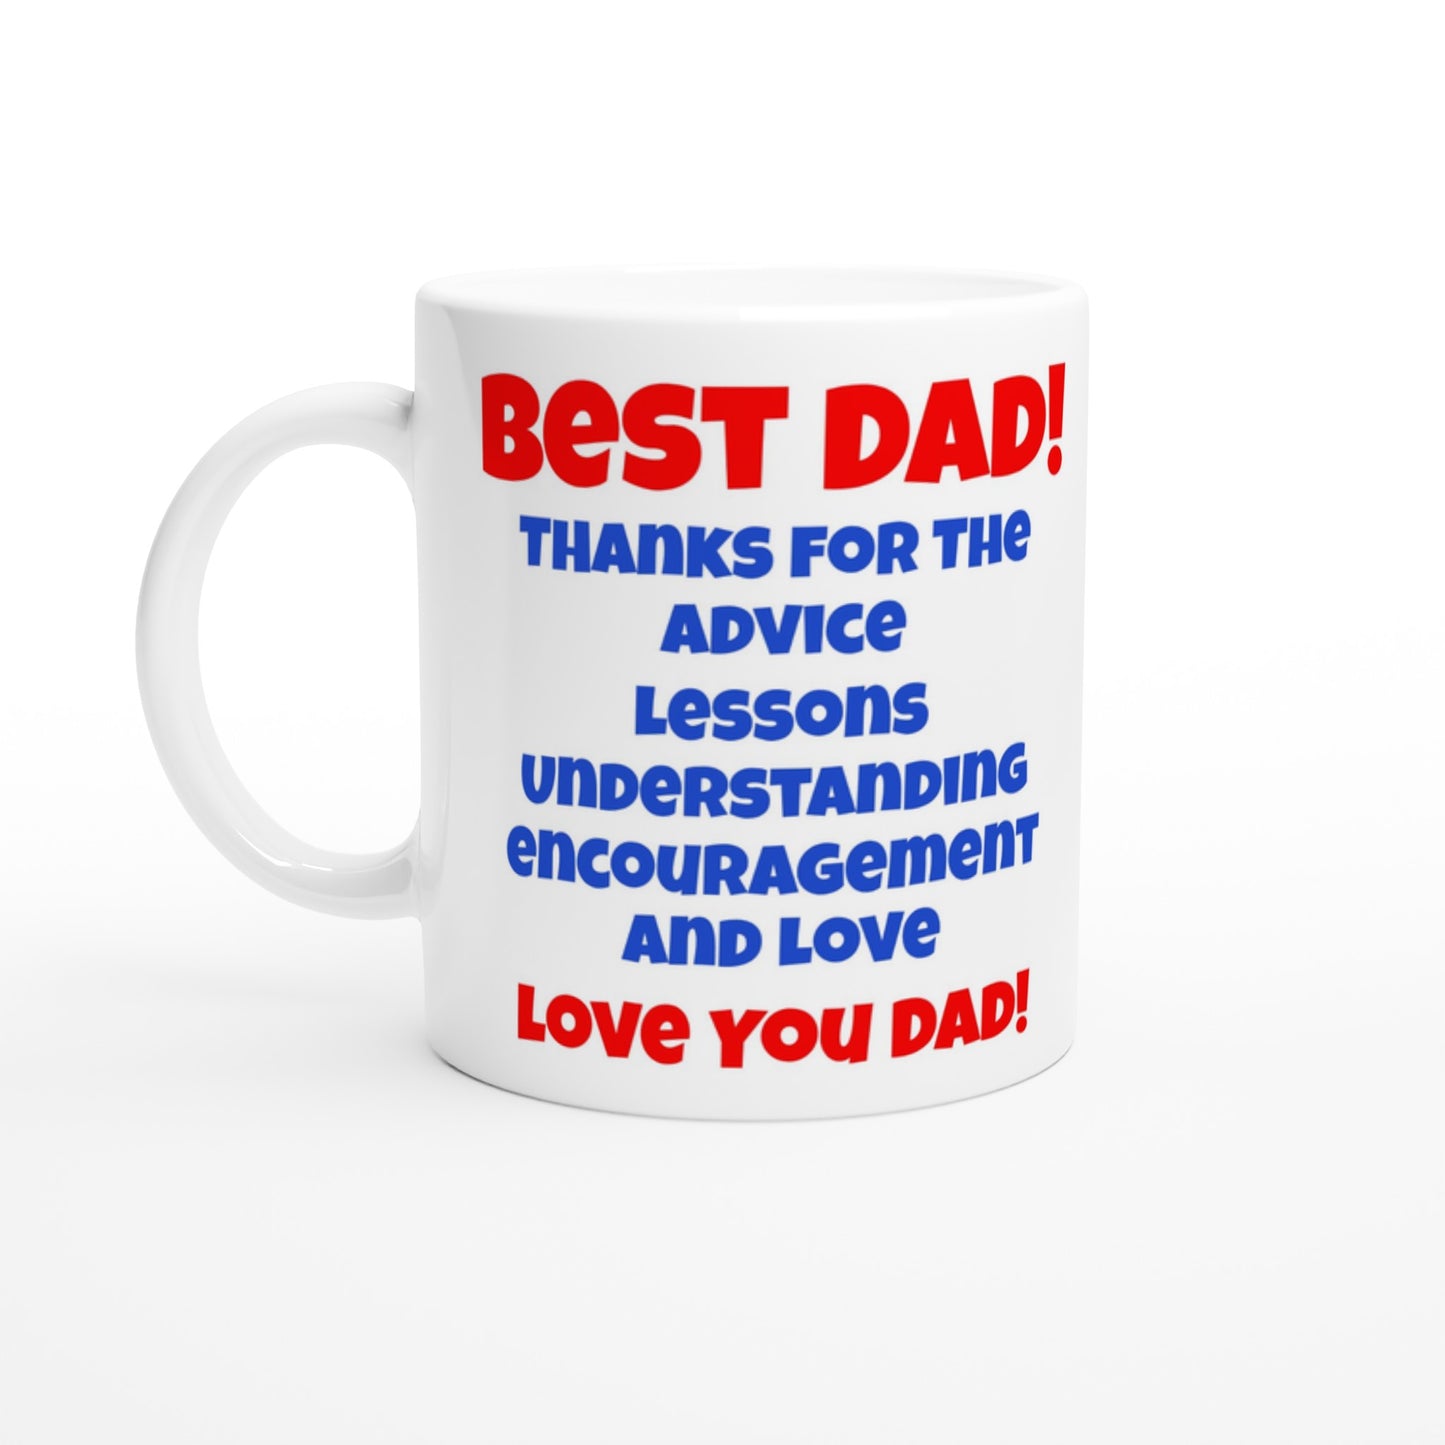 Best Dad White 11oz Ceramic Mug by Java Good Coffee